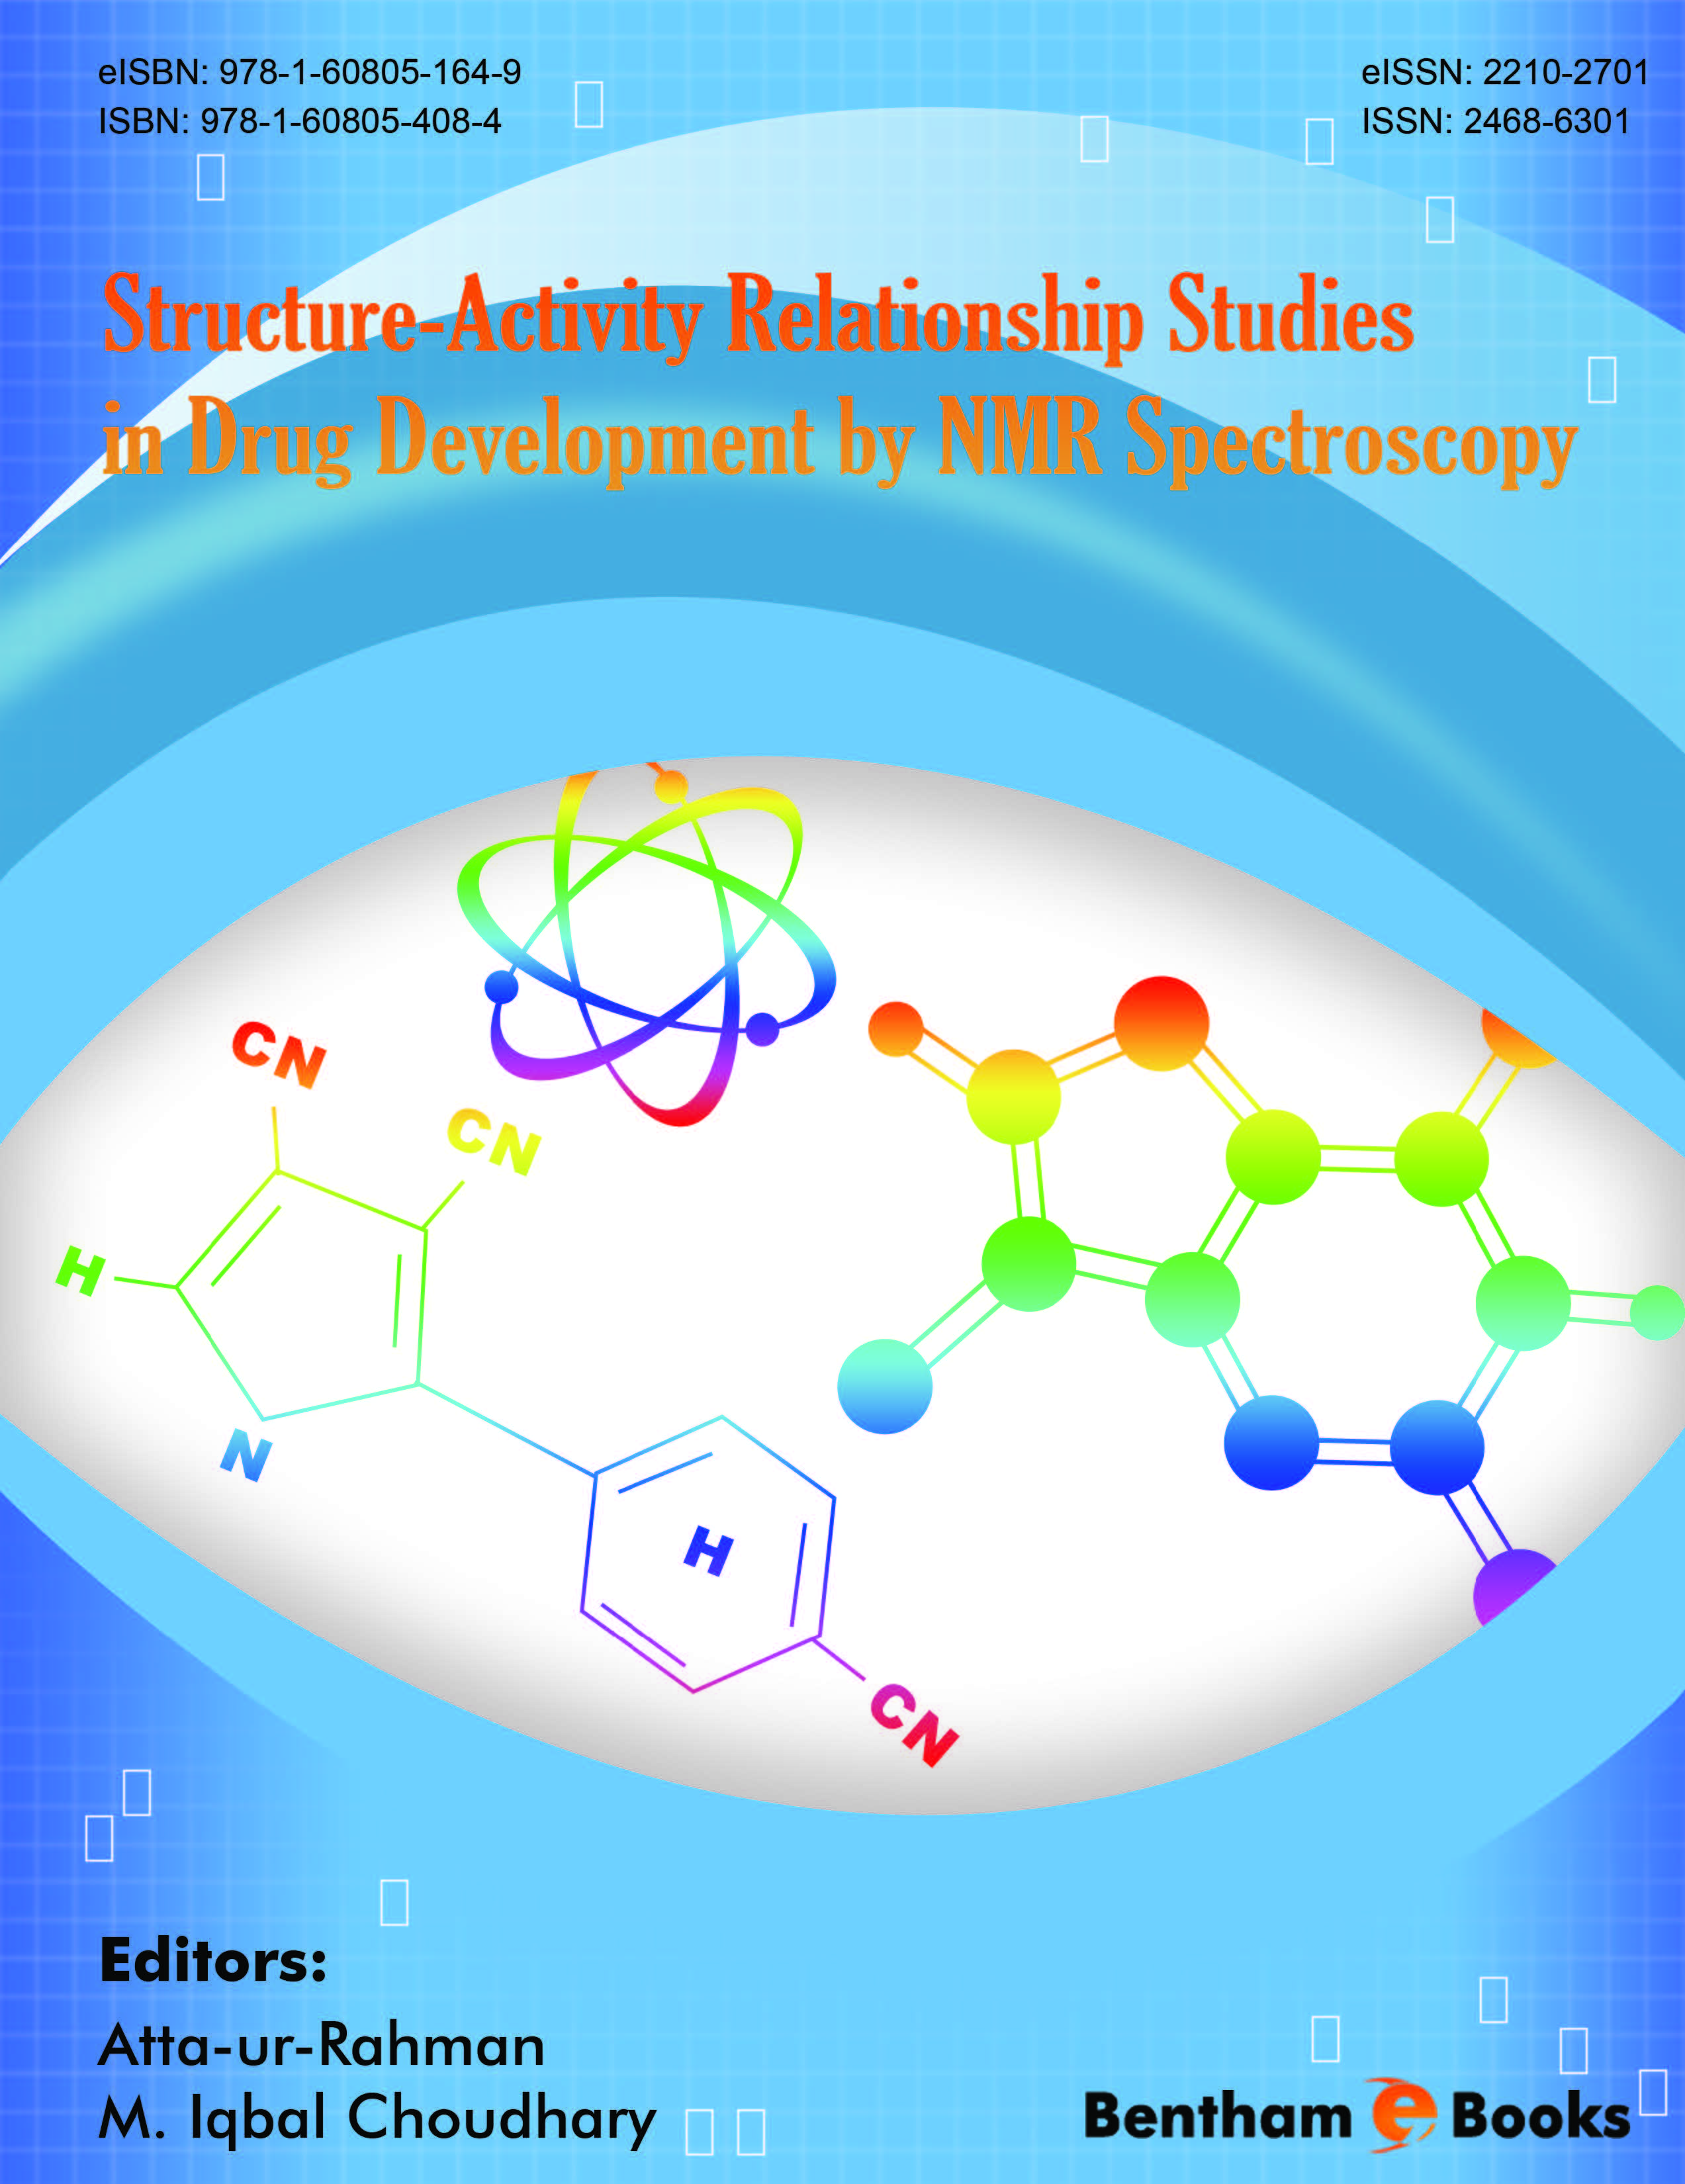 Structure-Activity Relationship Studies in Drug Development by NMR Spectroscopy